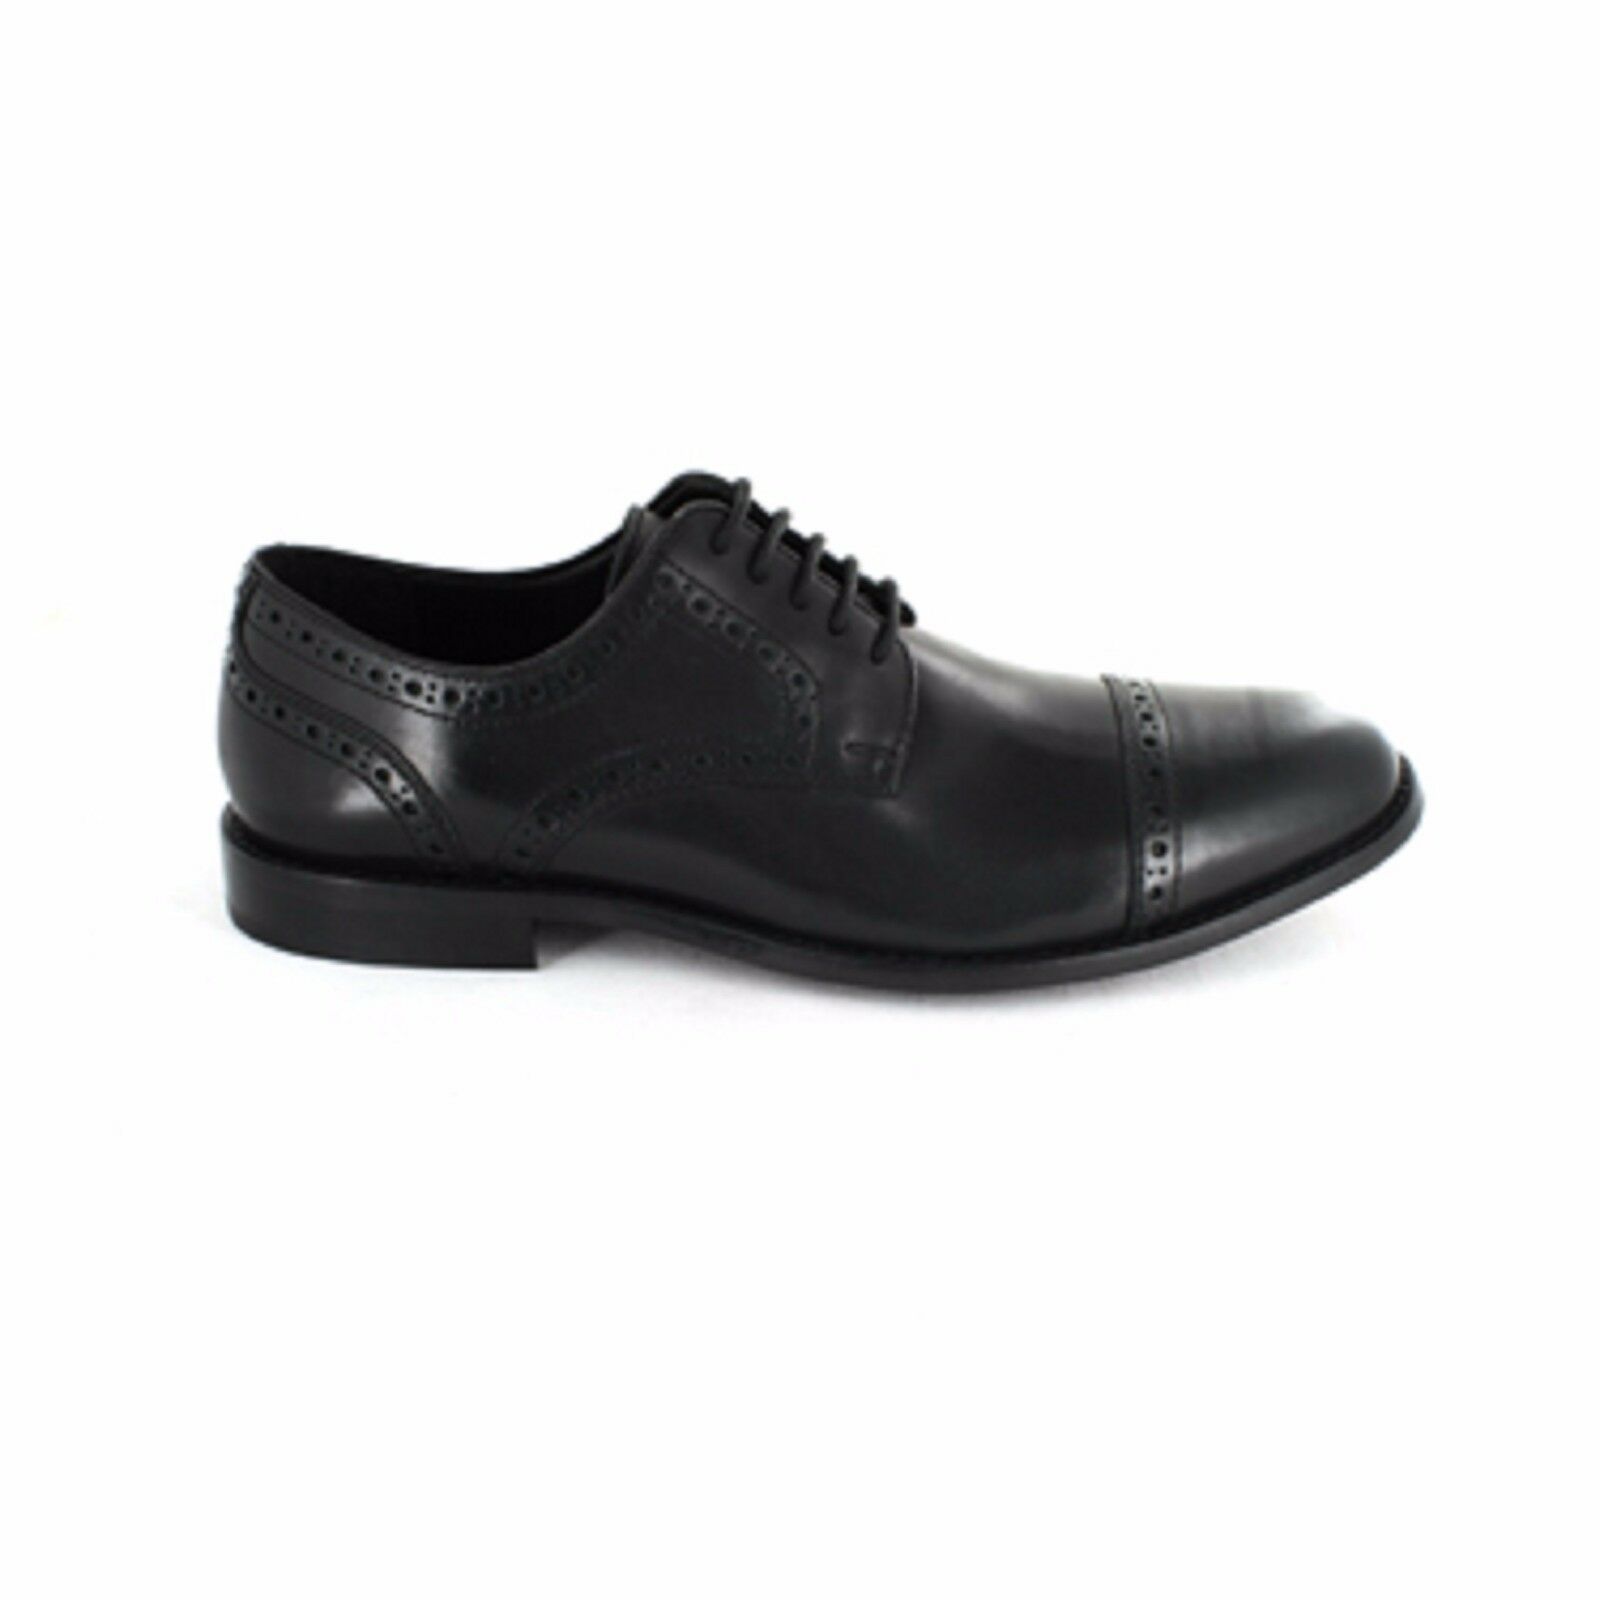 Nunn Bush Men Shoes Norcross Black Leather Lightweight Cap Toe Formal 84526-001 - image 3 of 7